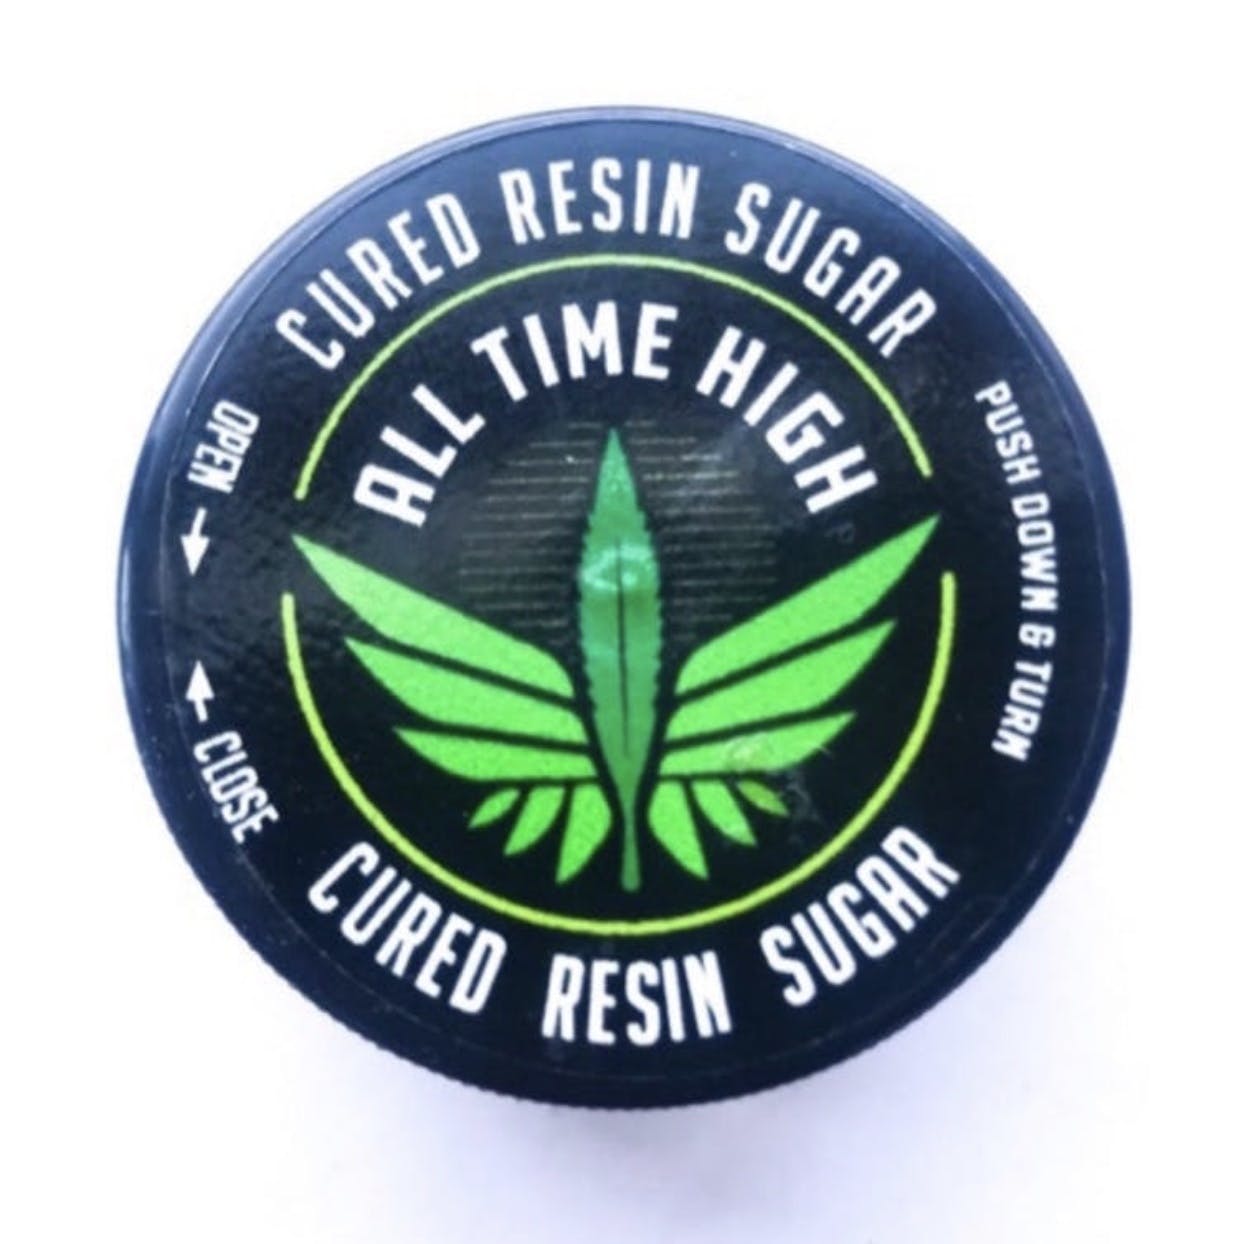 marijuana-dispensaries-secret-gardens-20-cap-in-los-angeles-all-time-high-cured-resin-sugar-5-for-160